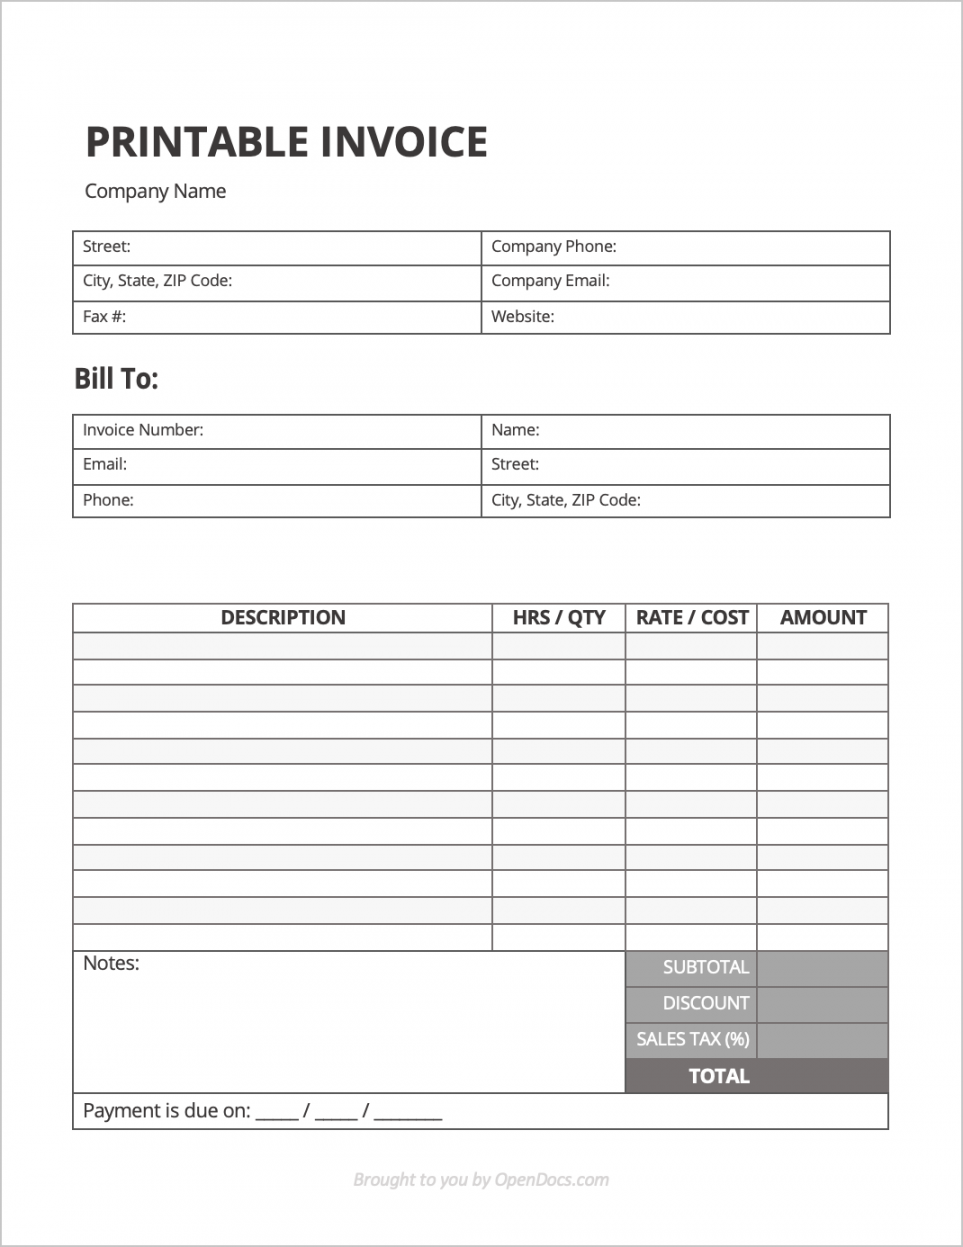 Free Invoice Template Printable - Printable - Free Printable Invoice Template  PDF  WORD  EXCEL